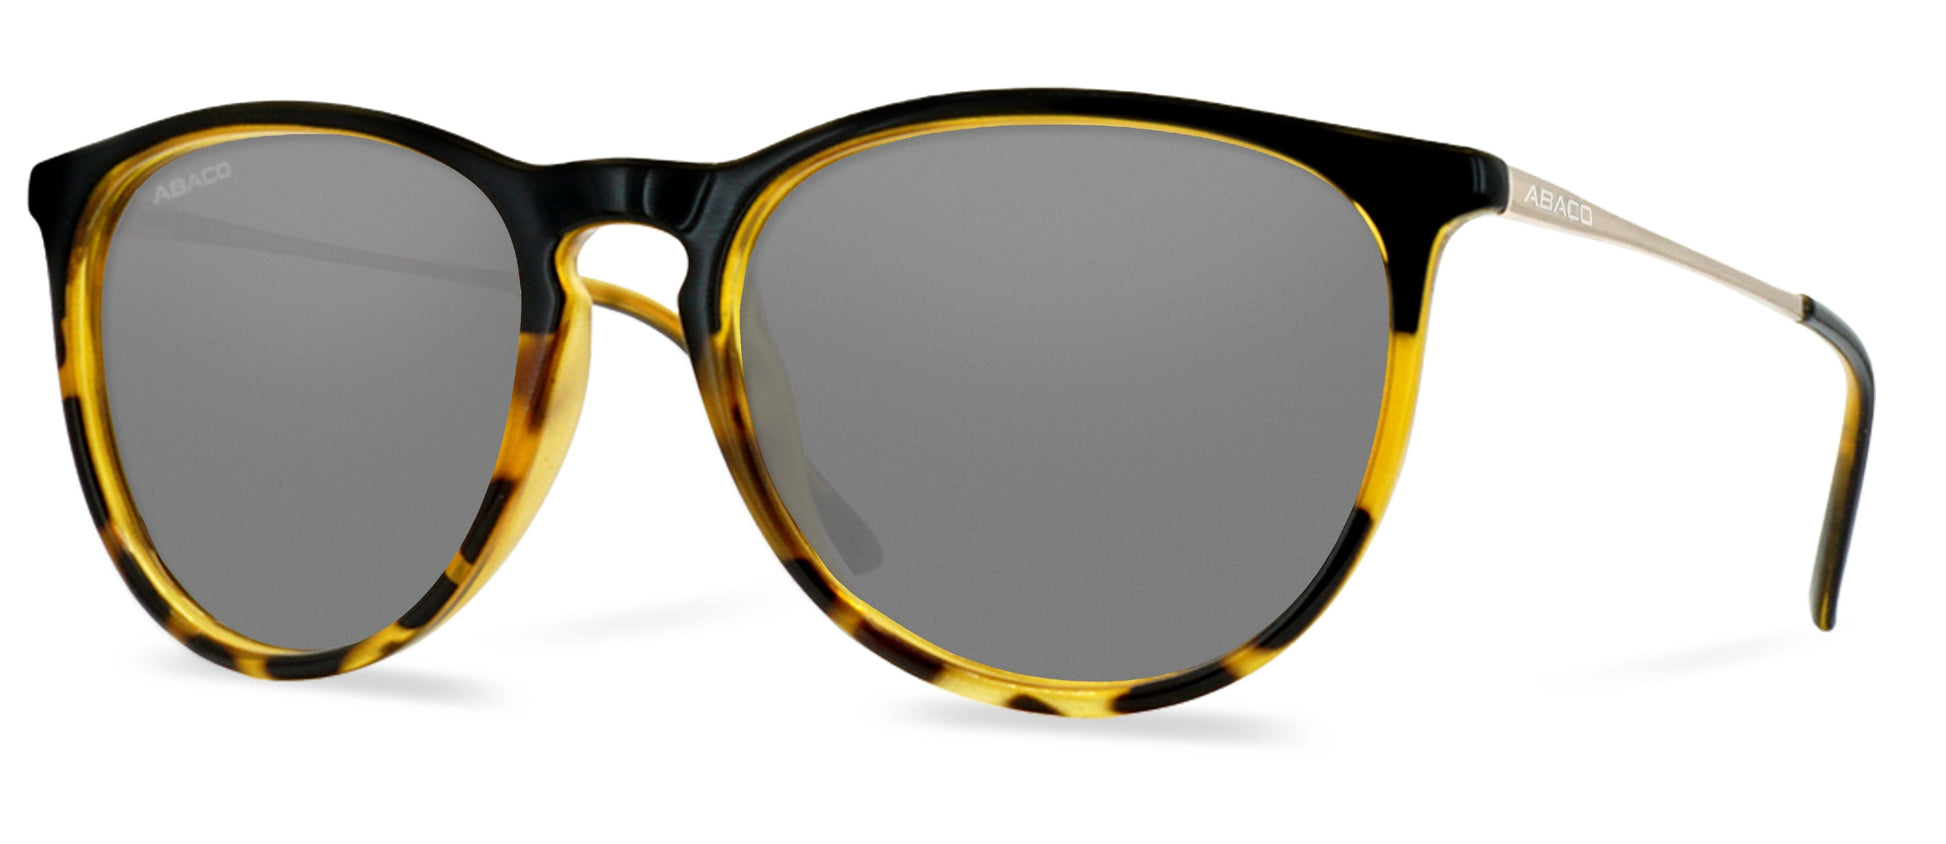 Abaco Piper Black Tortoise Fade Sunglasses Polarized Grey Lens Side